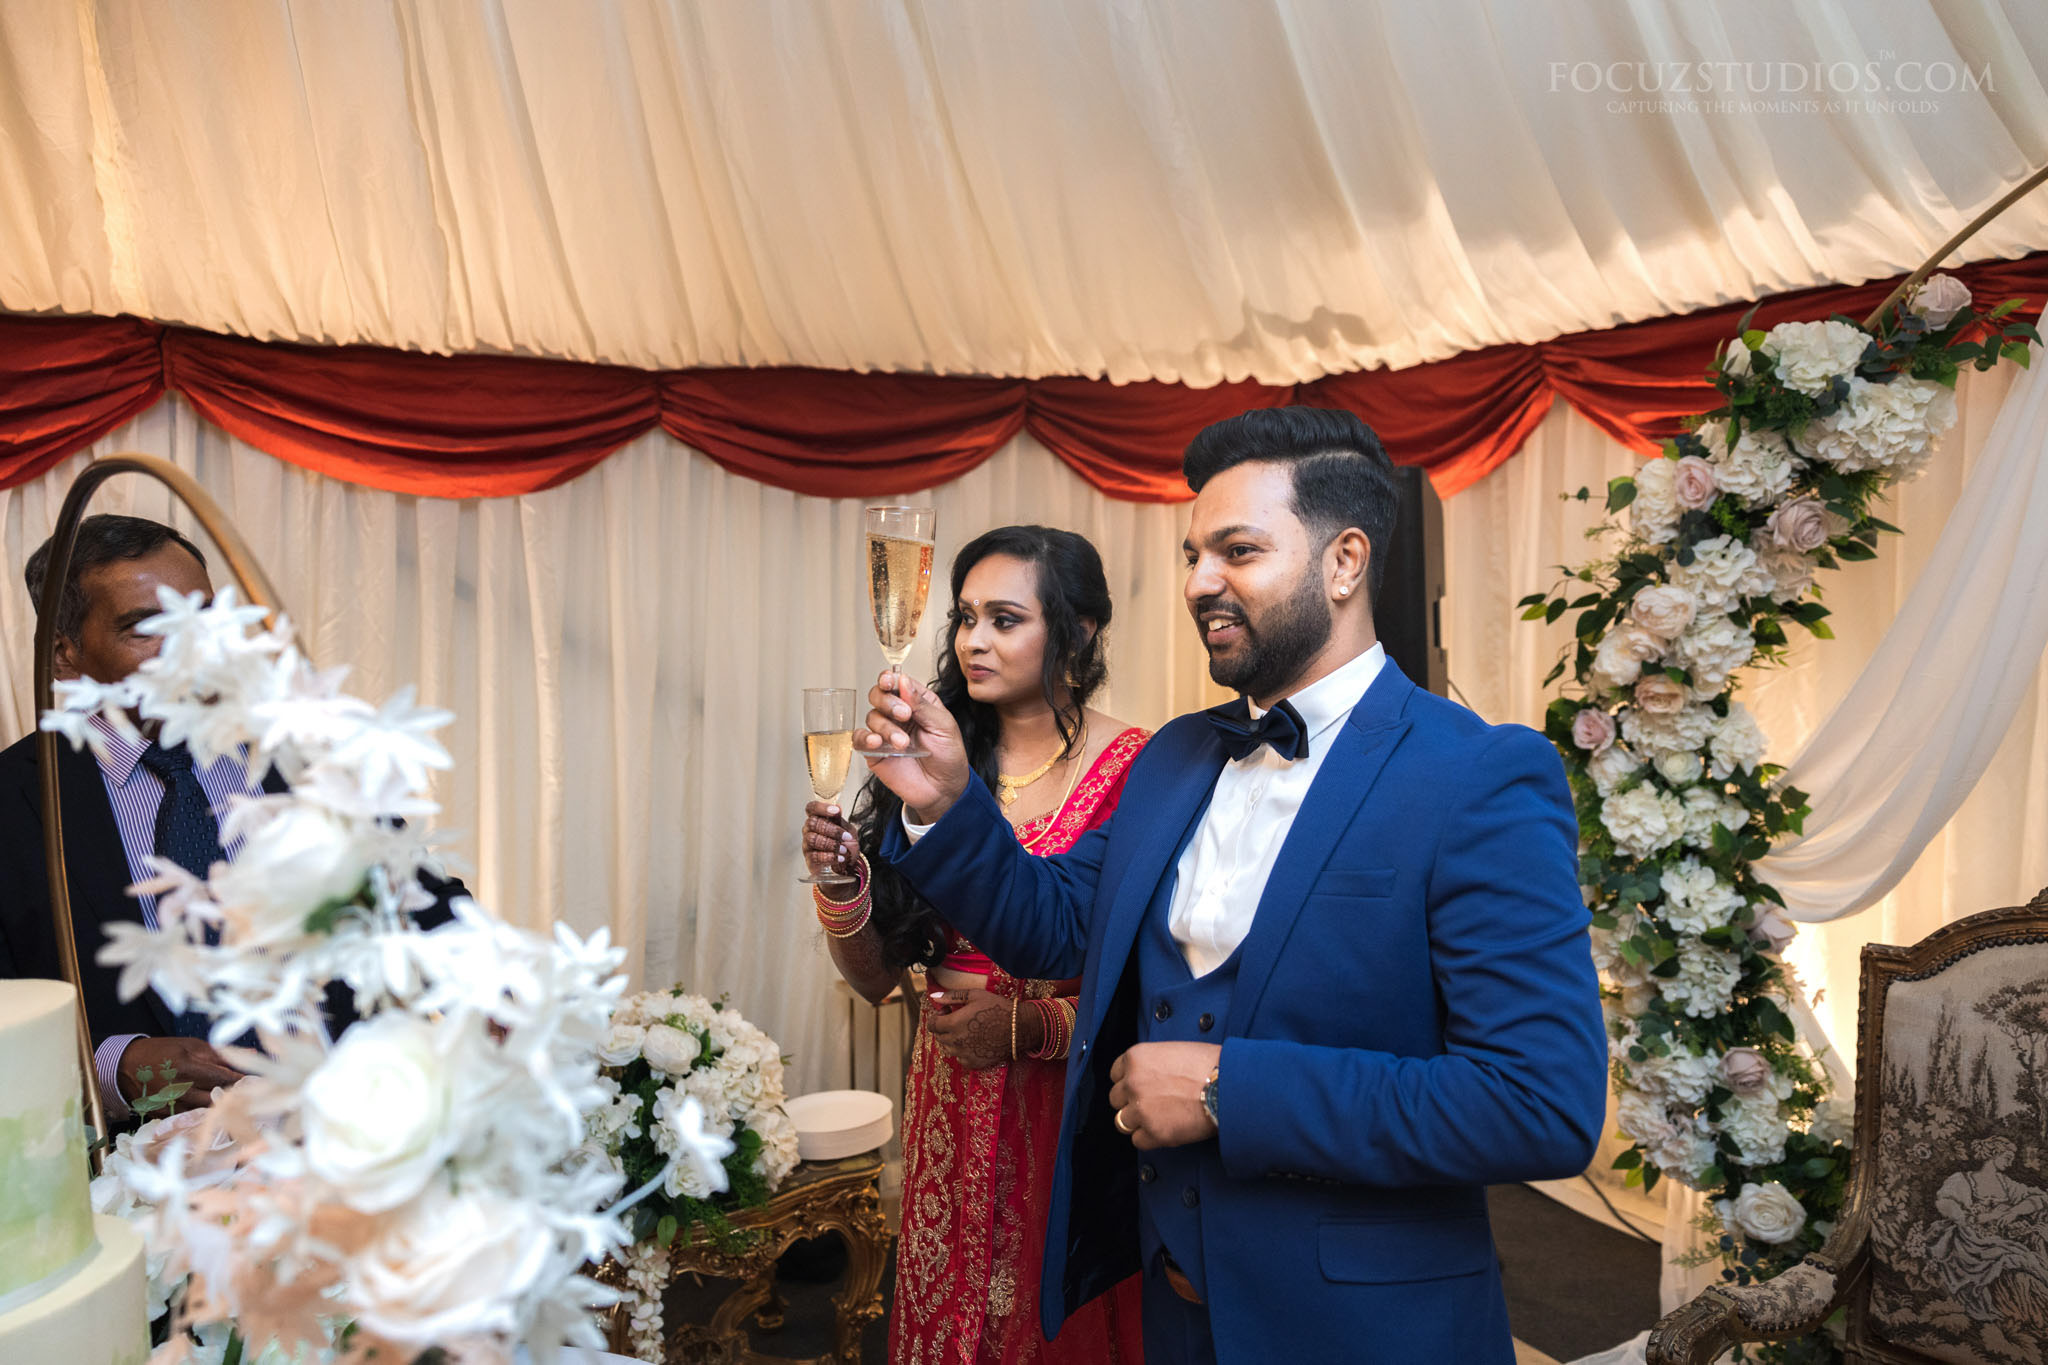 Capturing-wedding-reception-moments-14